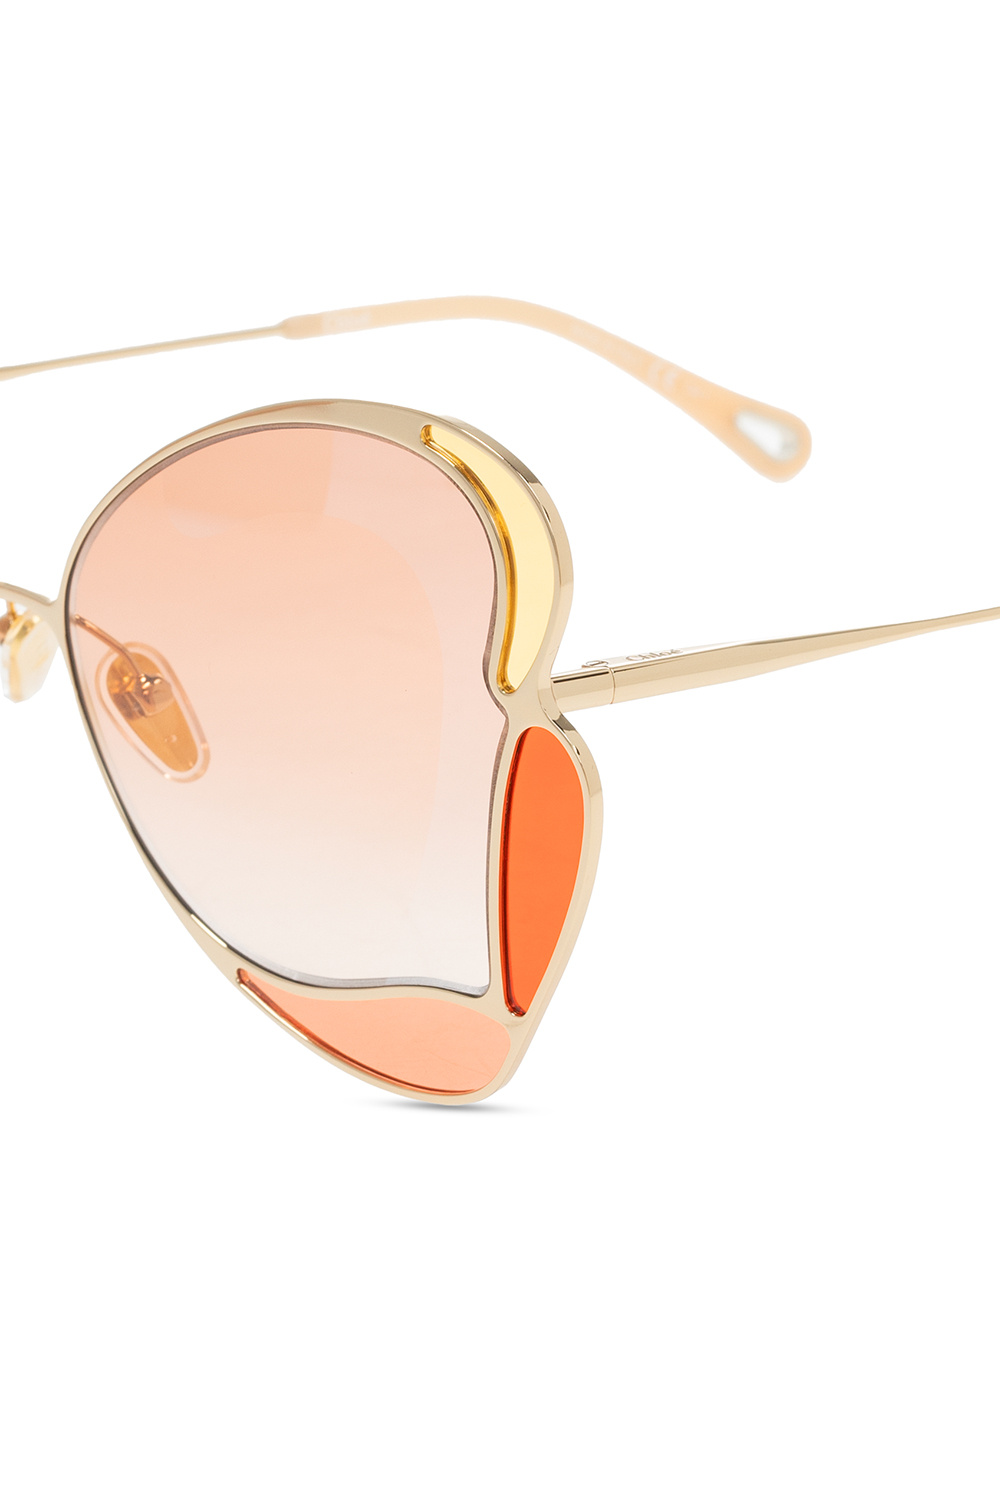 Chloé Versace Eyewear tinted square-frame sunglasses